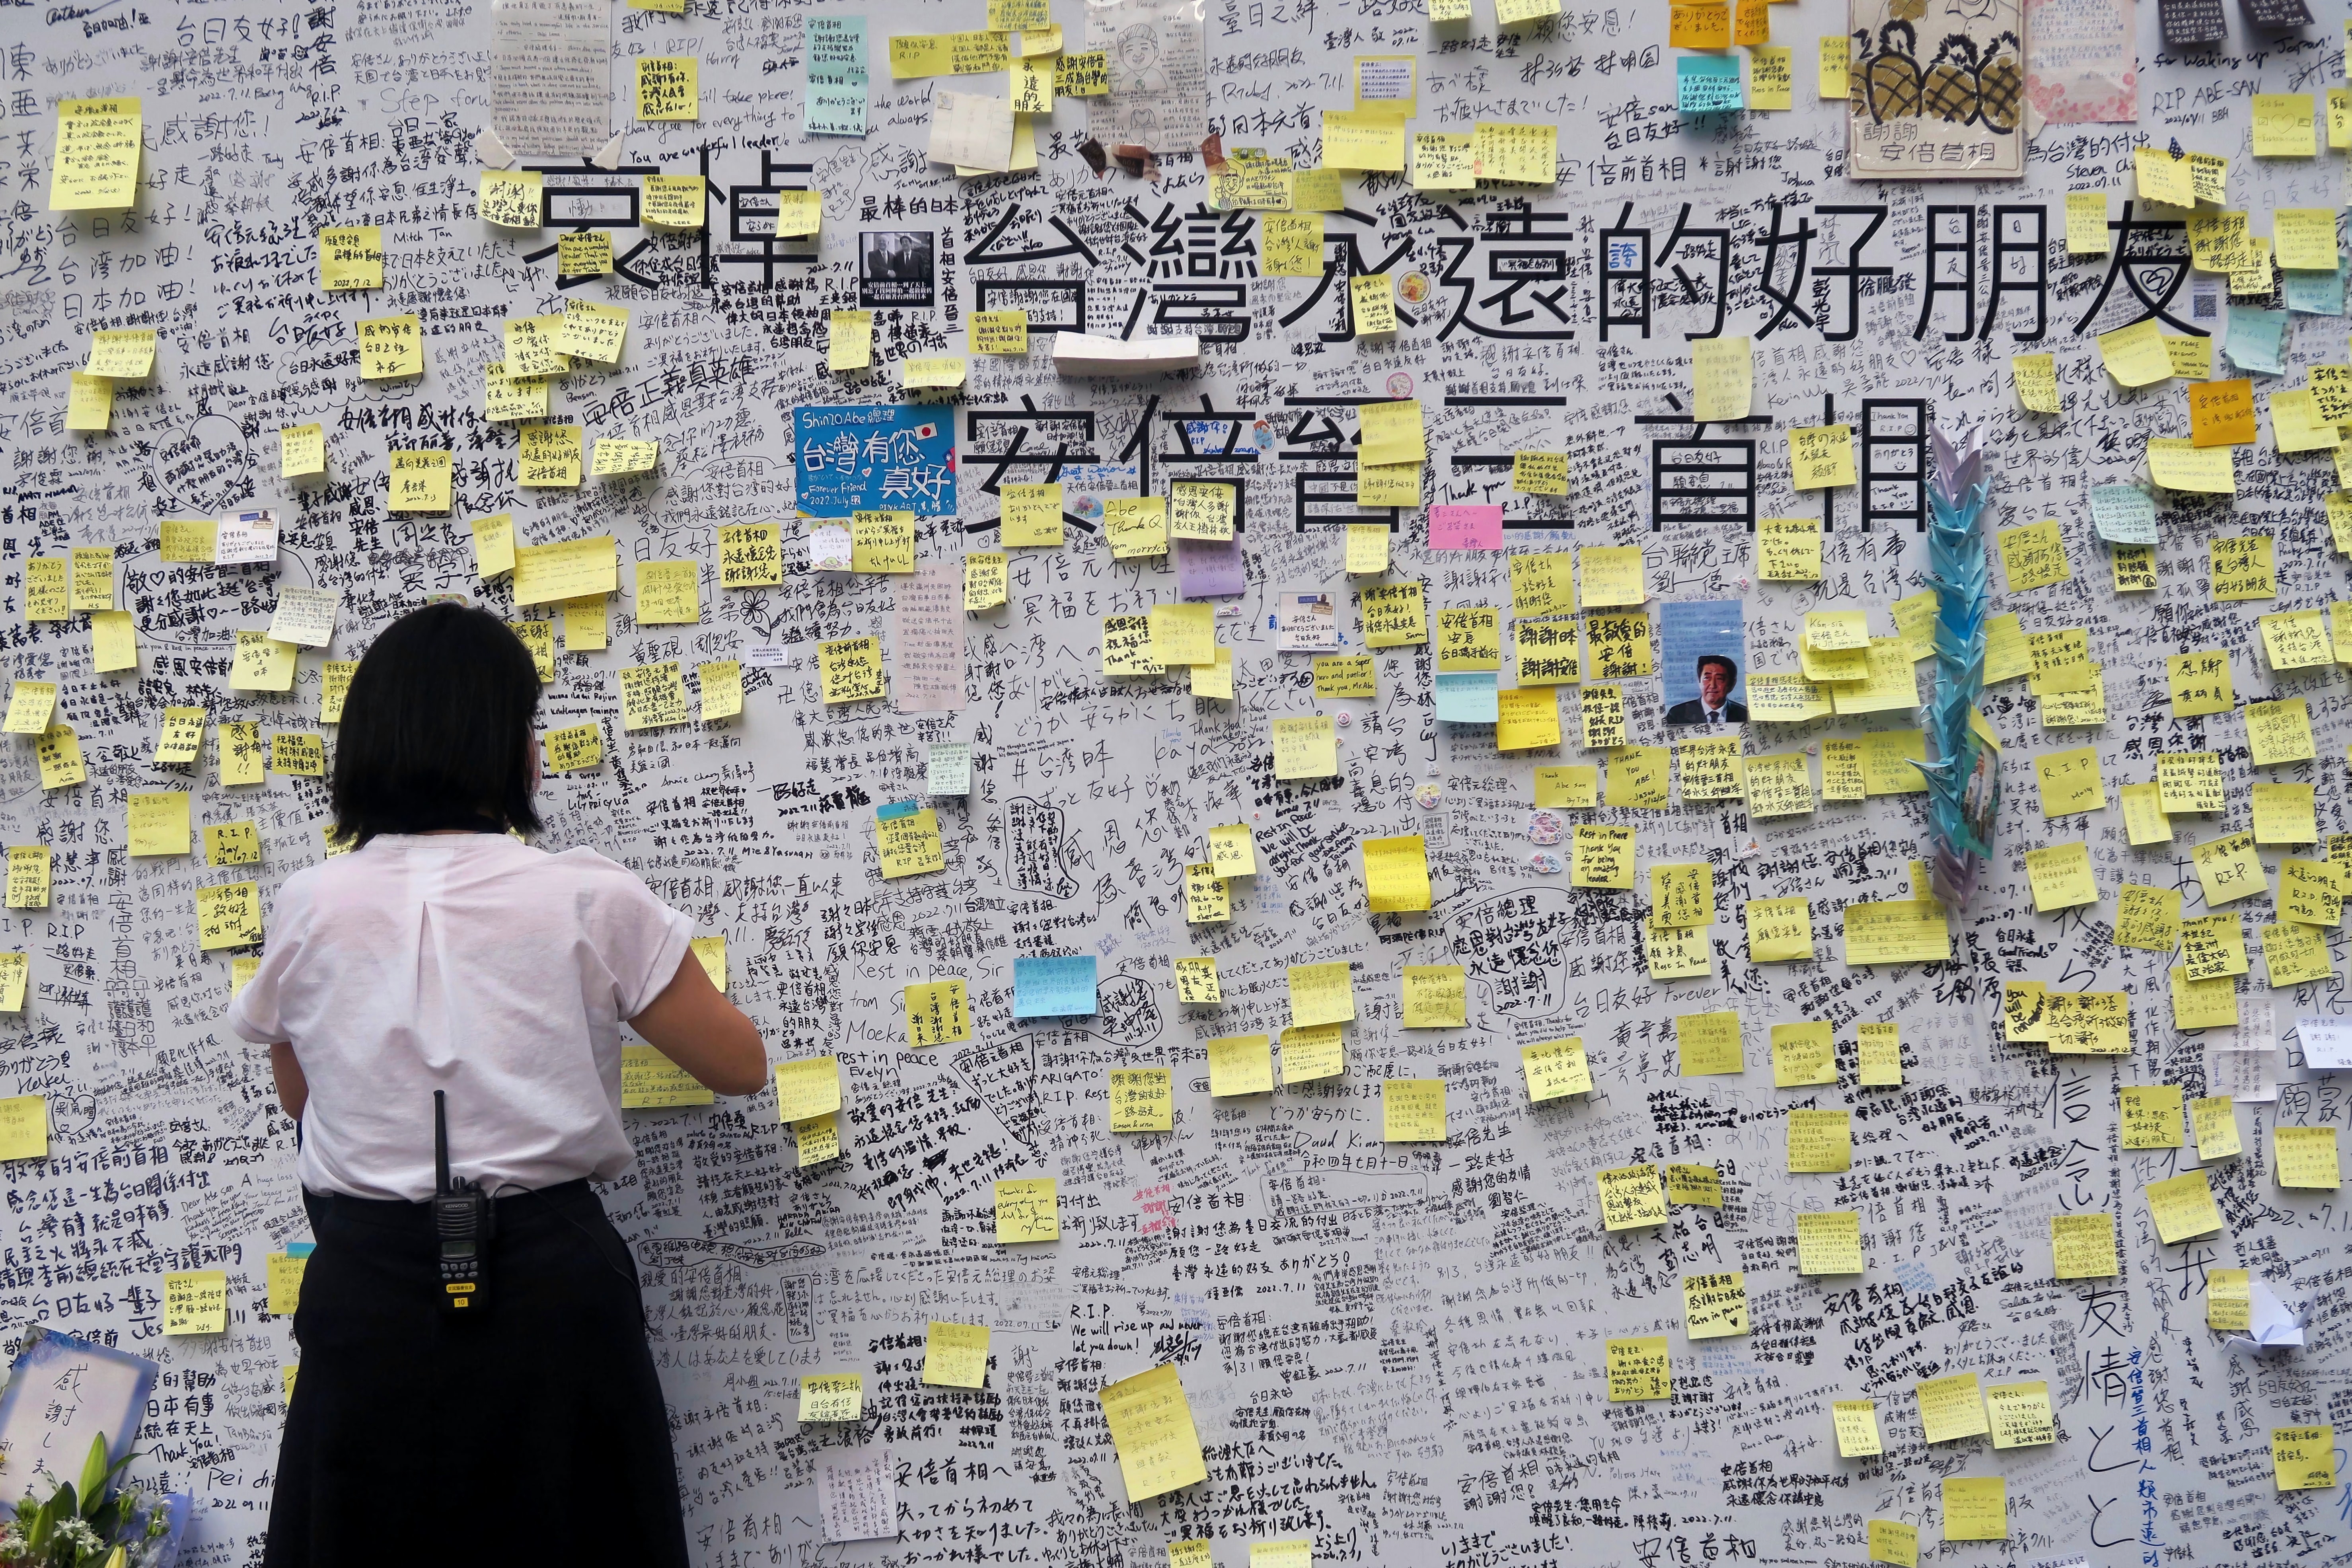 Shinzo Abe Memorial Wall at the Japan-Taiwan Exchange Association in Taipei. [Image: Philippe Yuan / Unsplash]